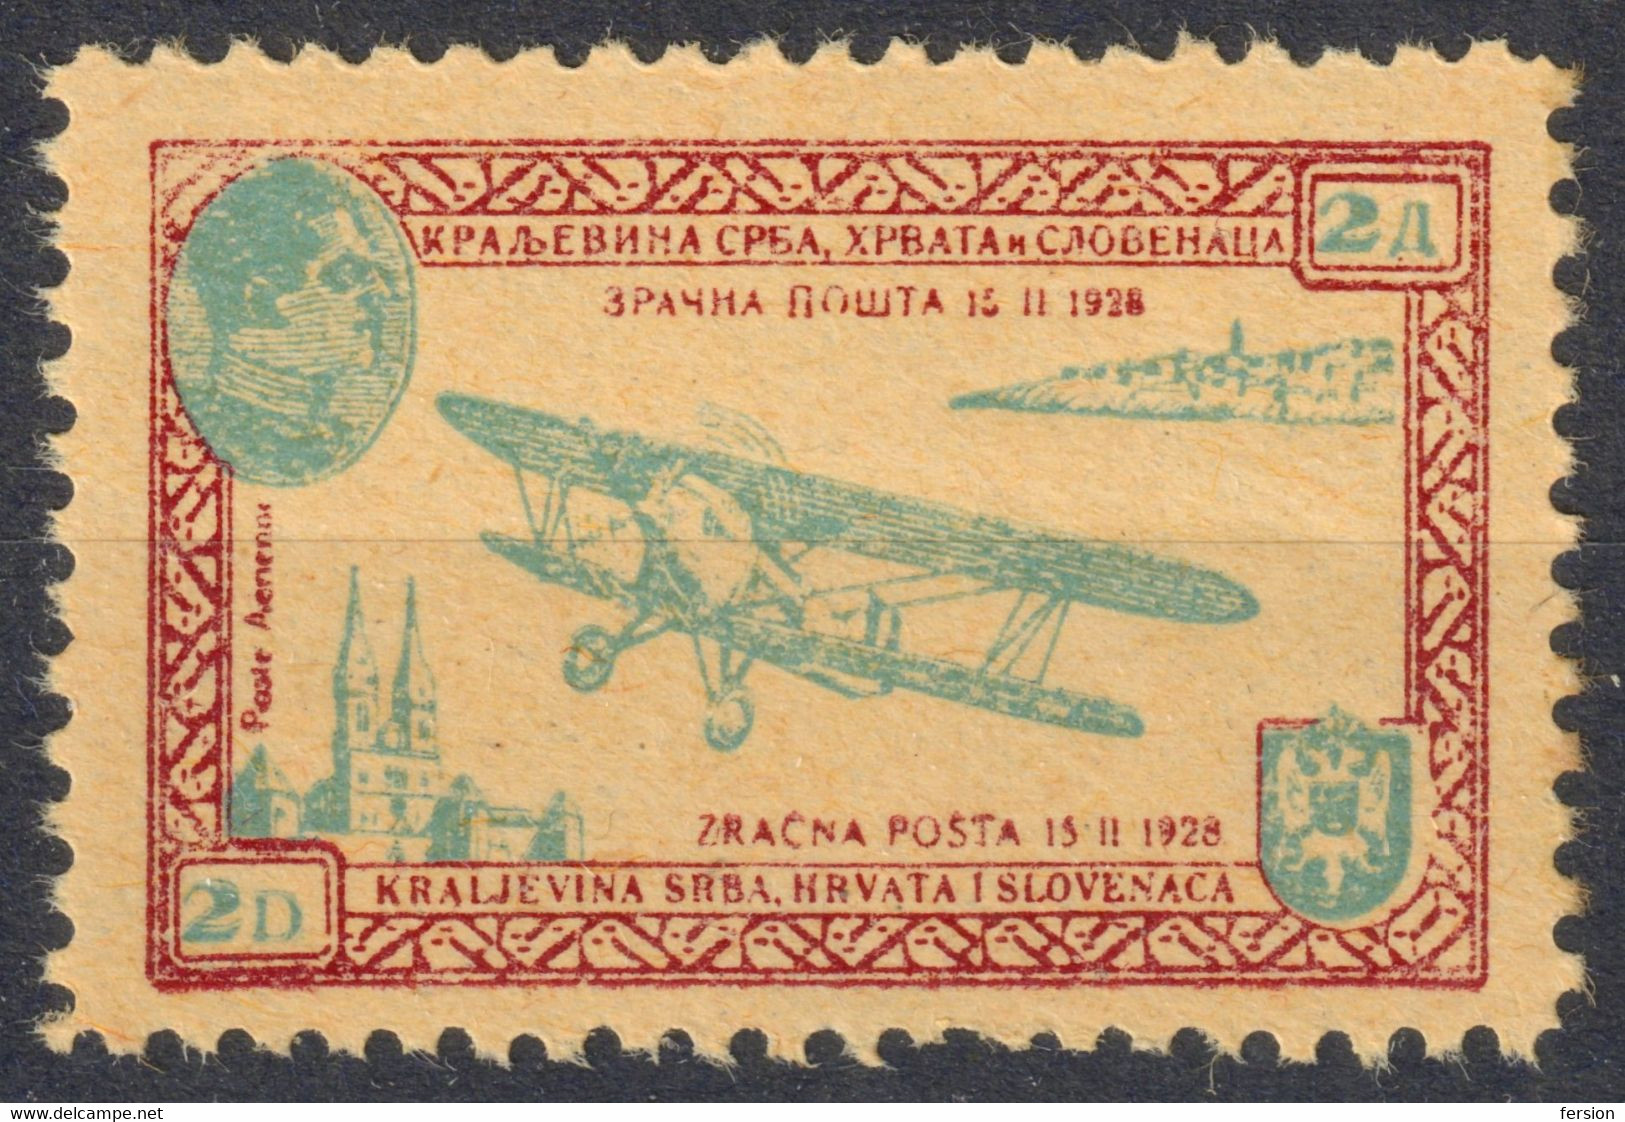 ESSAY Croatia Yugoslavia SHS 1928 AIRPLANE Biplane Zagreb Cathedal Church Zracna Posta Air Mail Par Avion King Alexander - Airmail